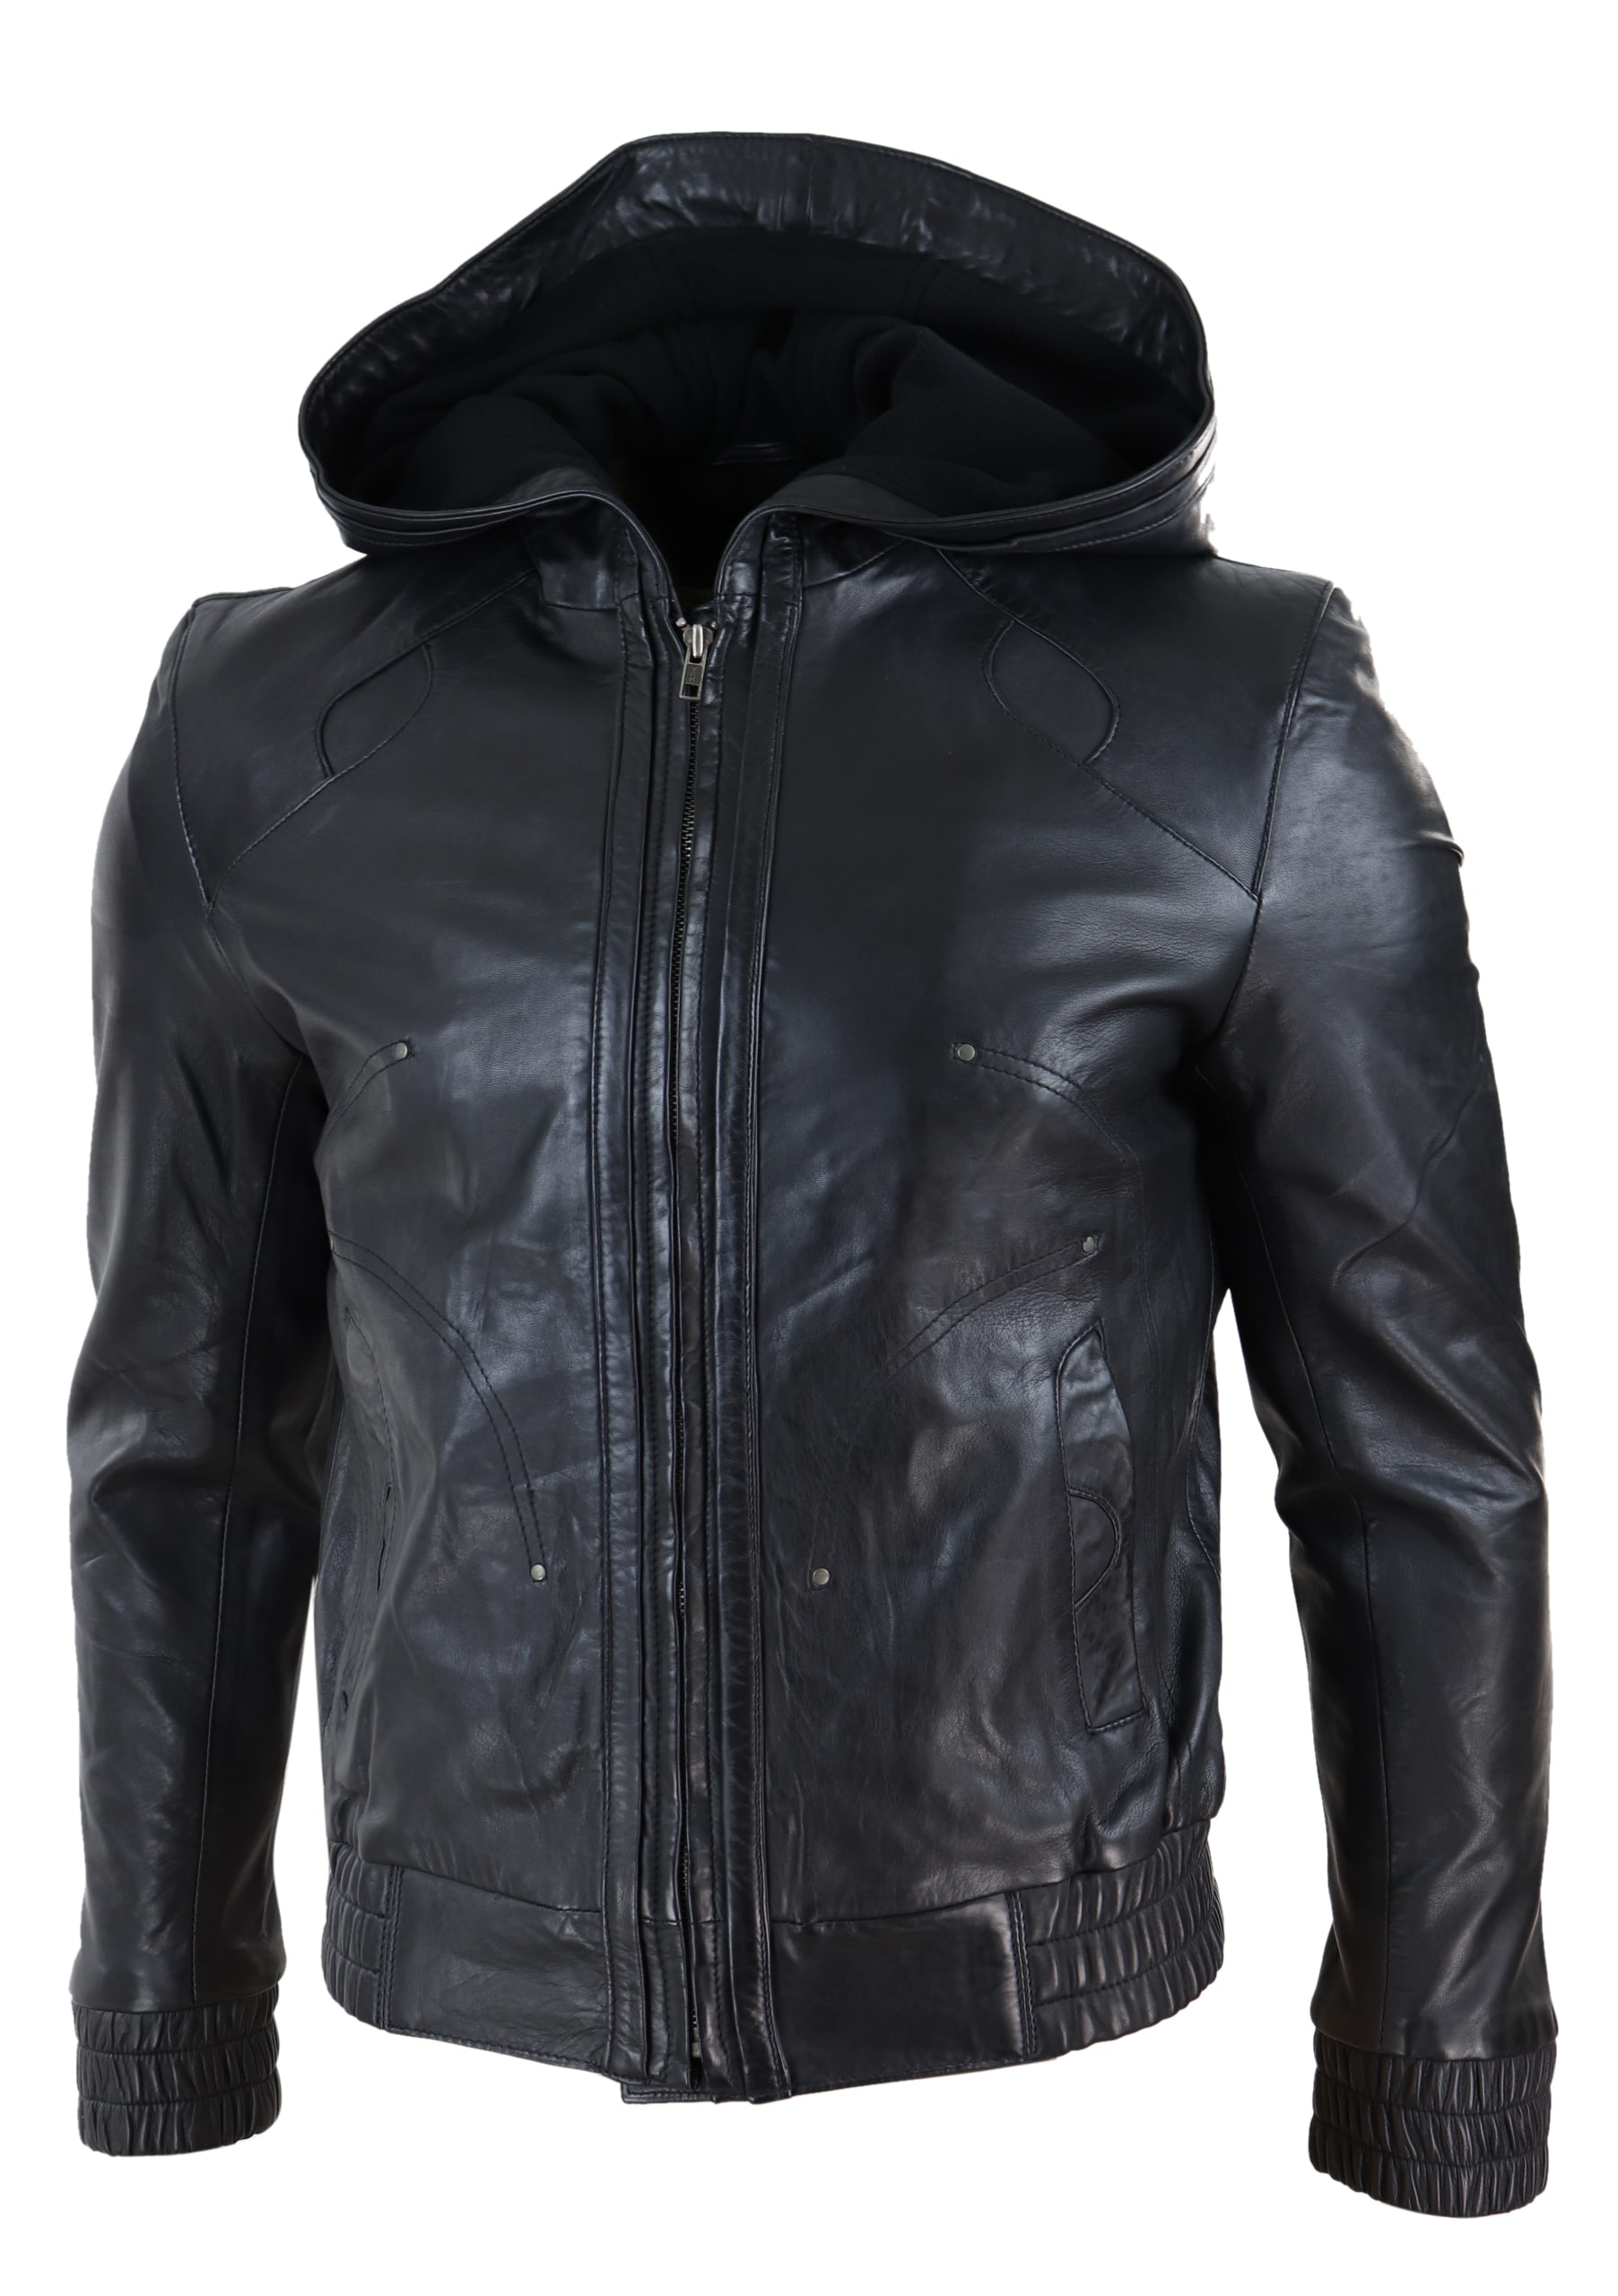 Mens Black Leather Bomber Jacket with Hood: Buy Online - Happy Gentleman